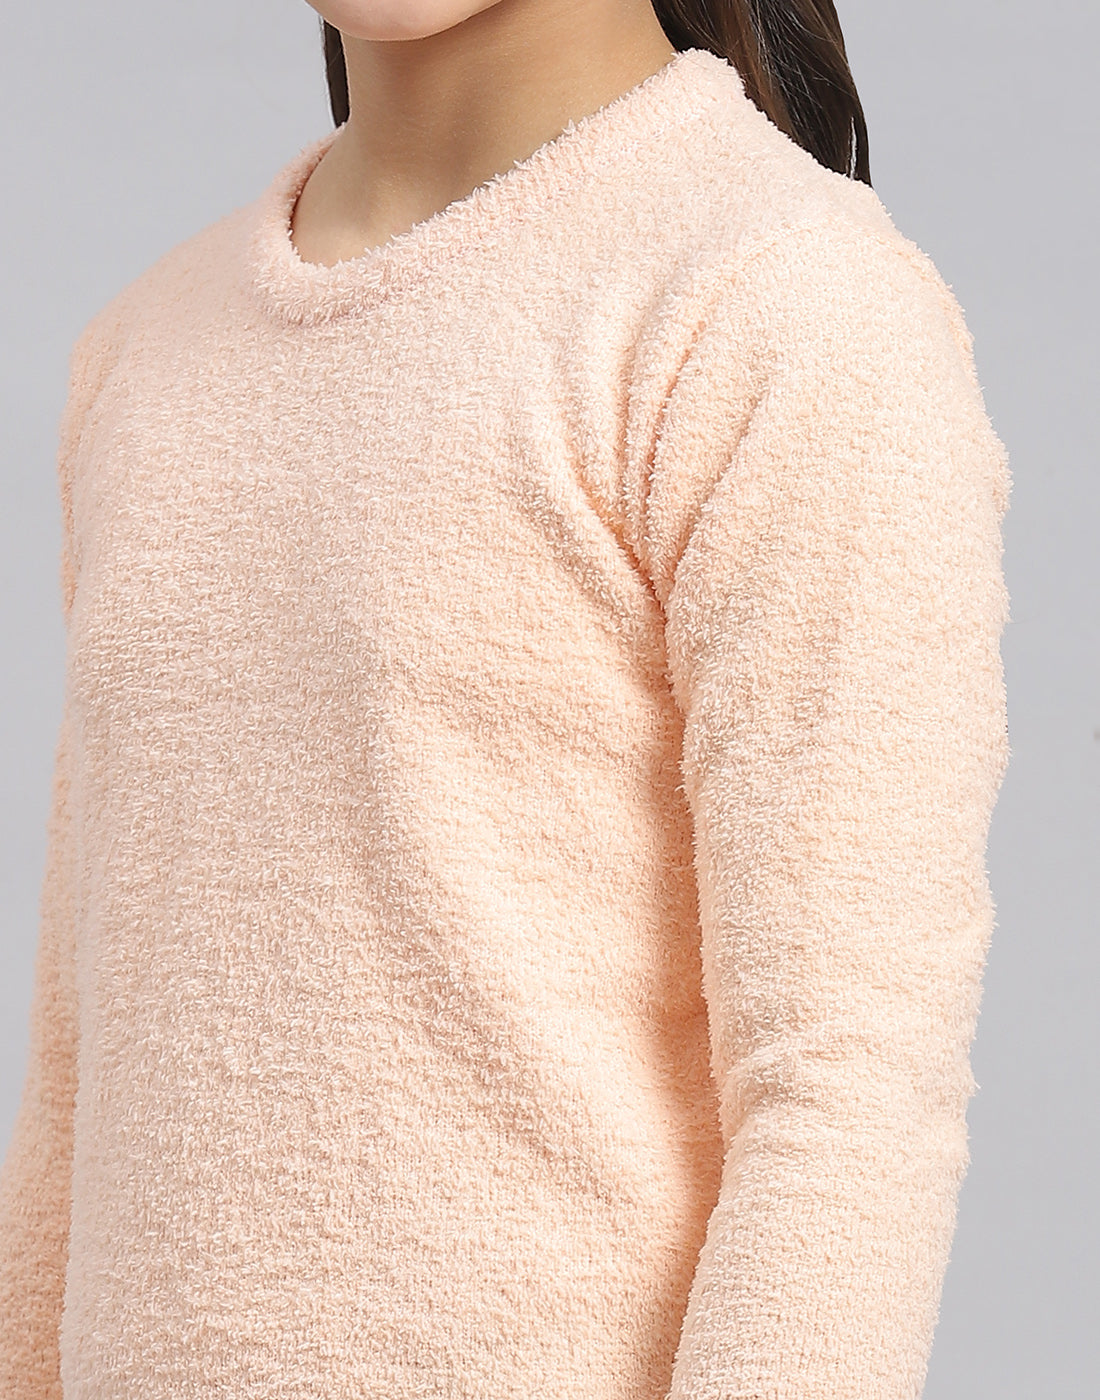 Girls Peach Solid Round Neck Full Sleeve Sweater